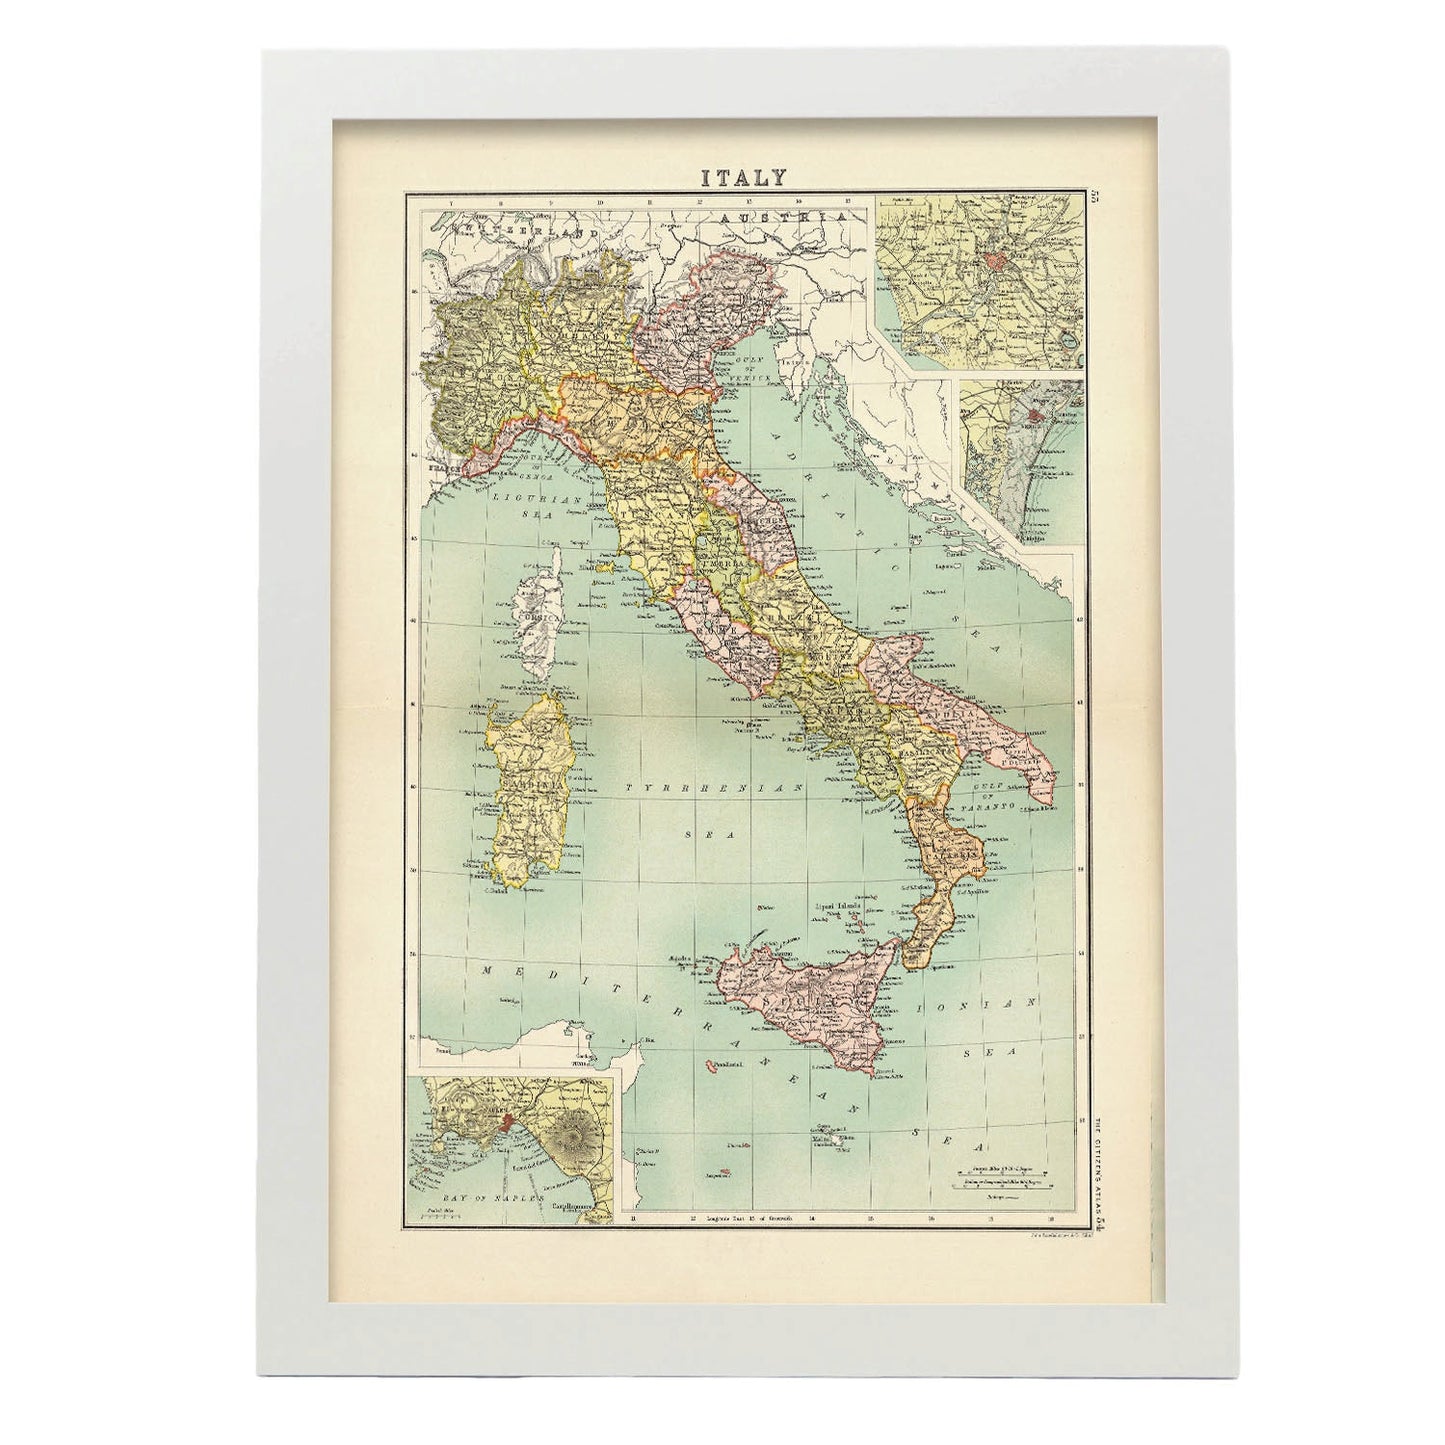 Vintage Map of Italy Citizen Atlas-Artwork-Nacnic-A3-Marco Blanco-Nacnic Estudio SL